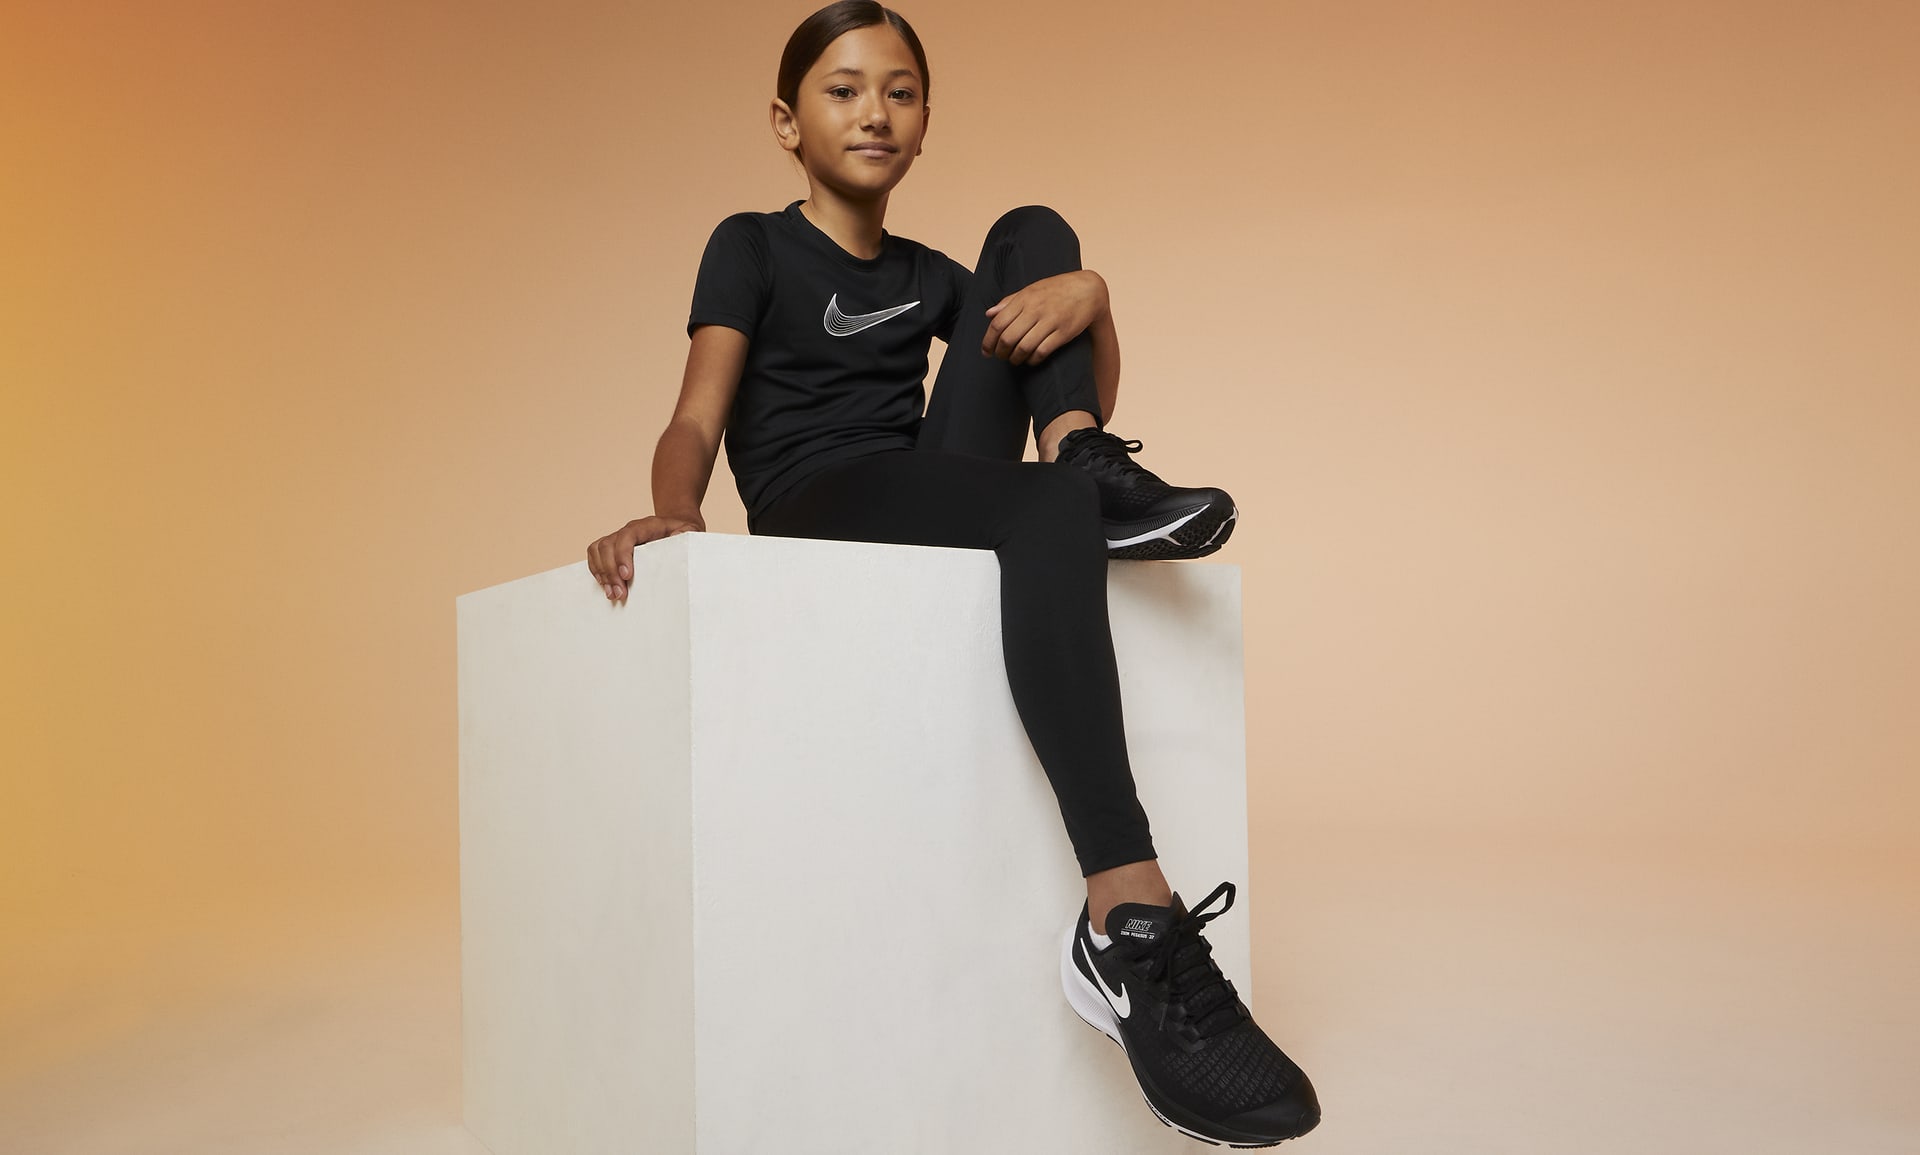 Nike One Big Kids' (Girls') Dri-FIT Short-Sleeve Training Top.